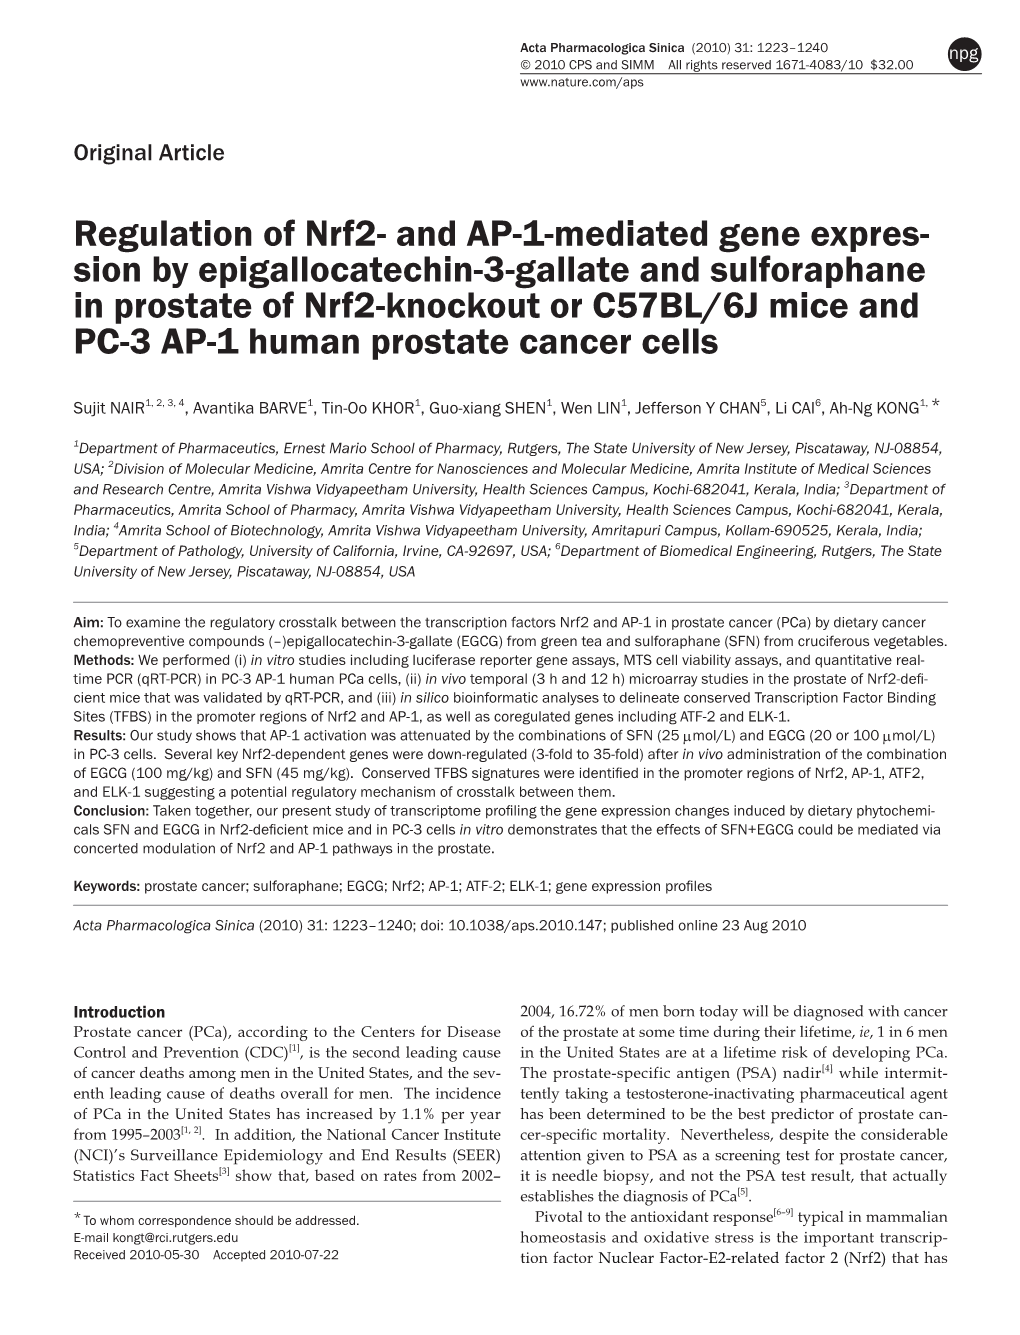 Regulation of Nrf2- and AP-1-Mediated Gene